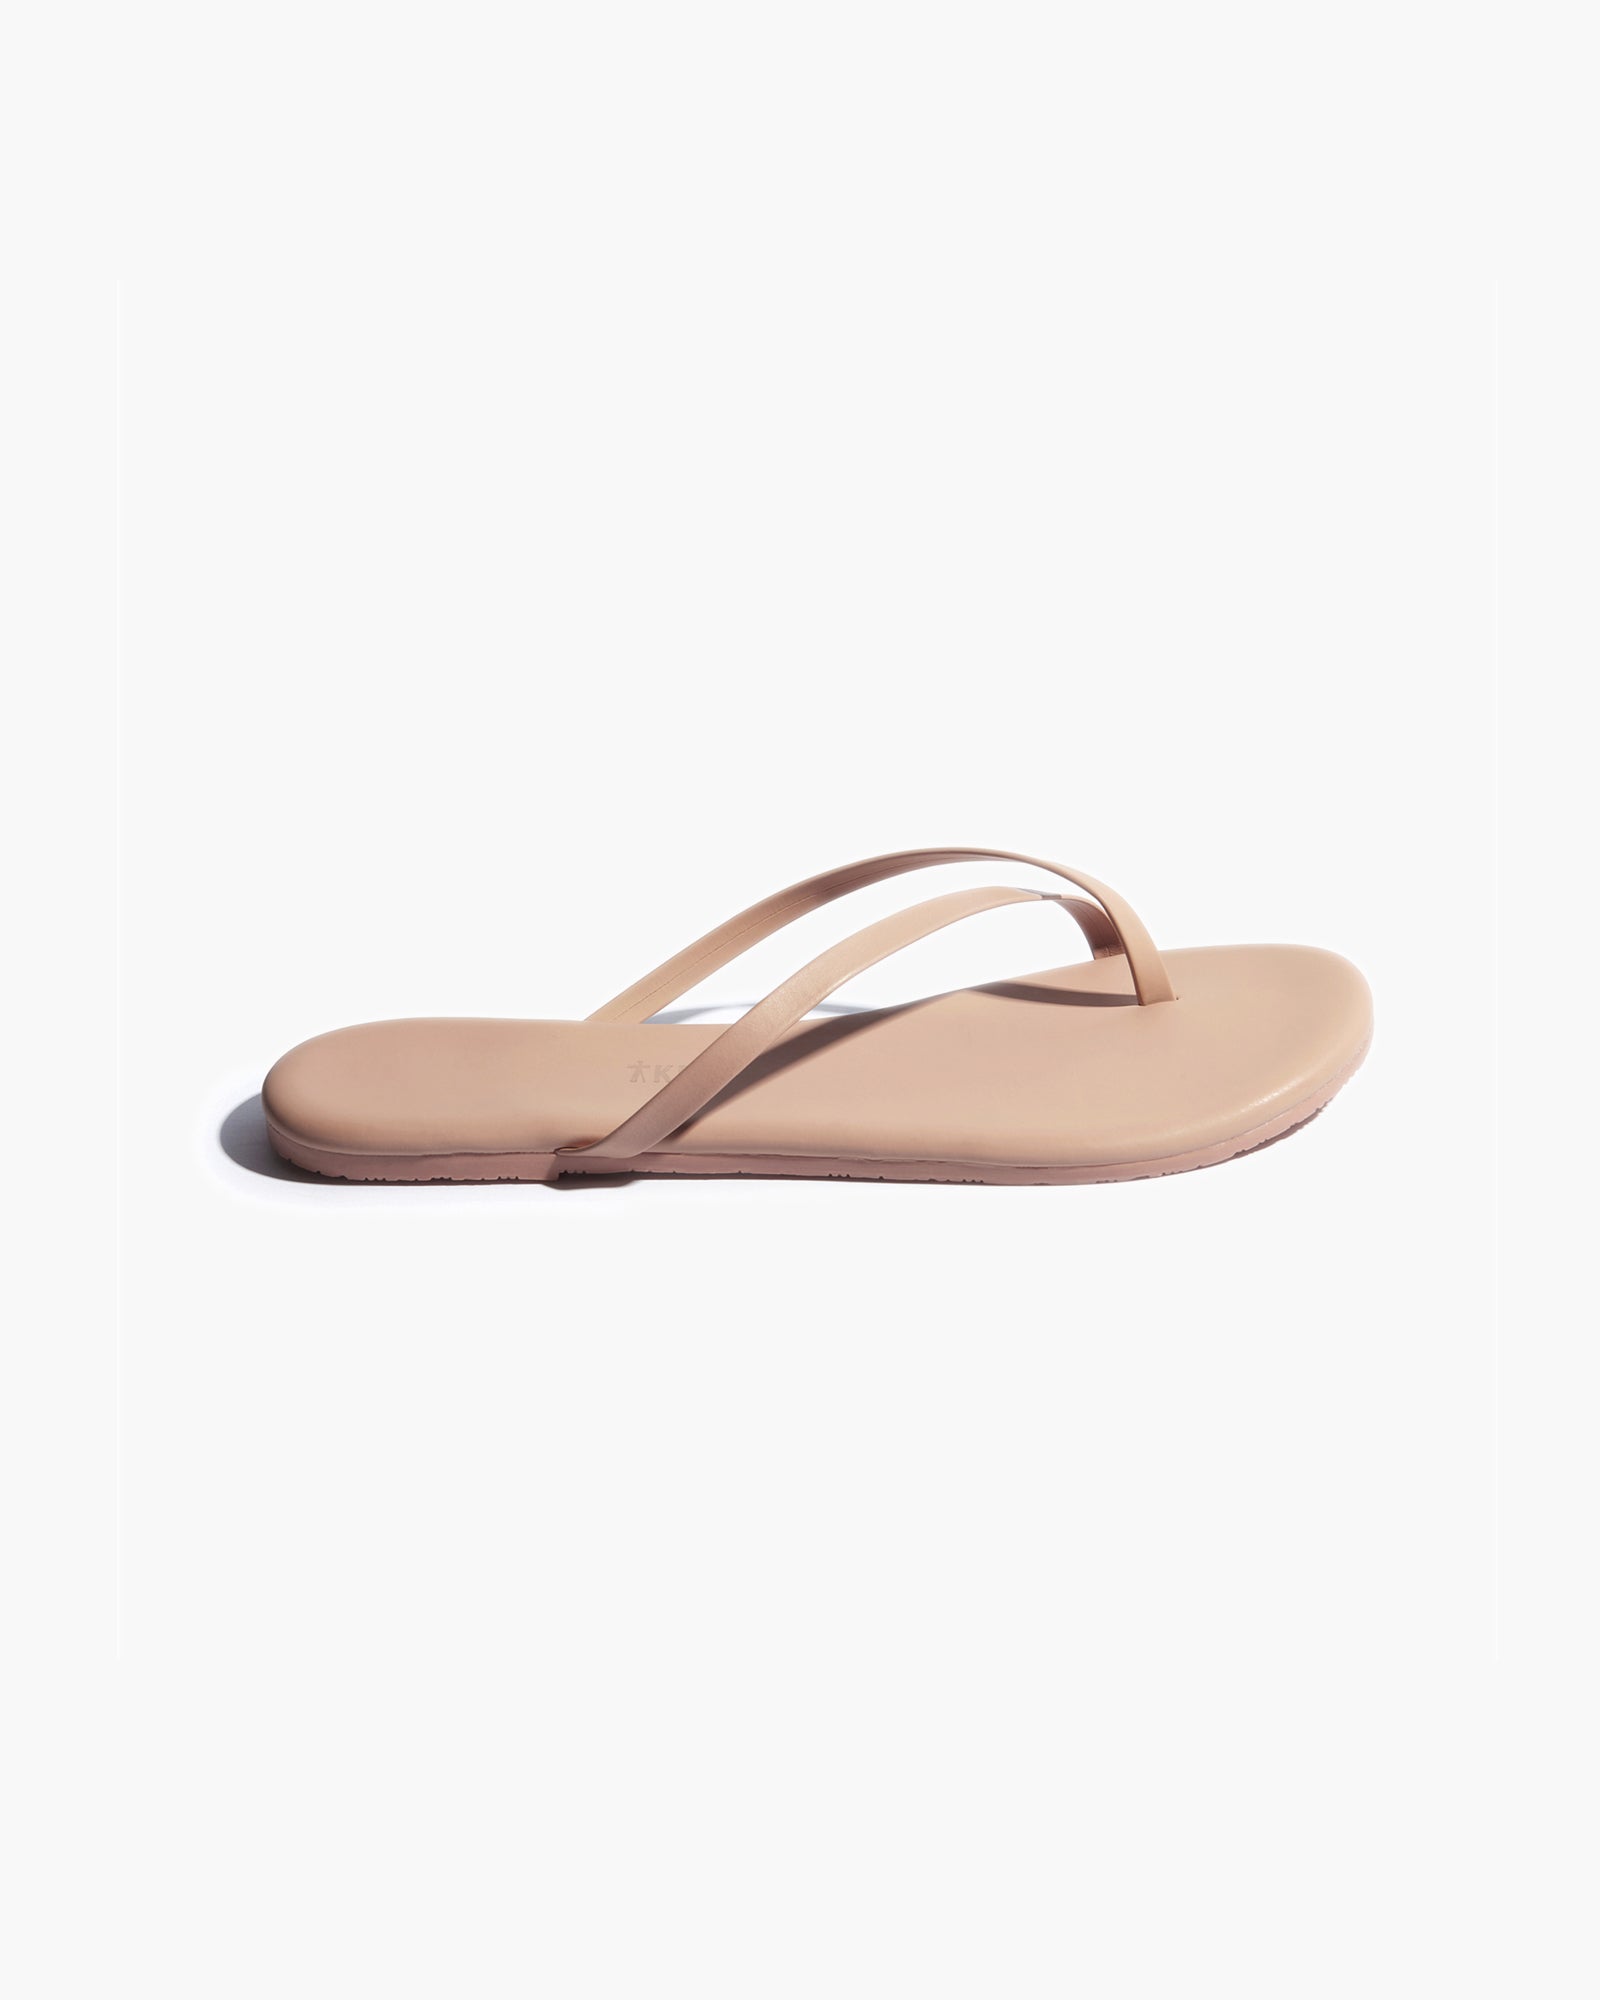 Riley Vegan in Matte No. 6 | Sandals | Women's Footwear – TKEES